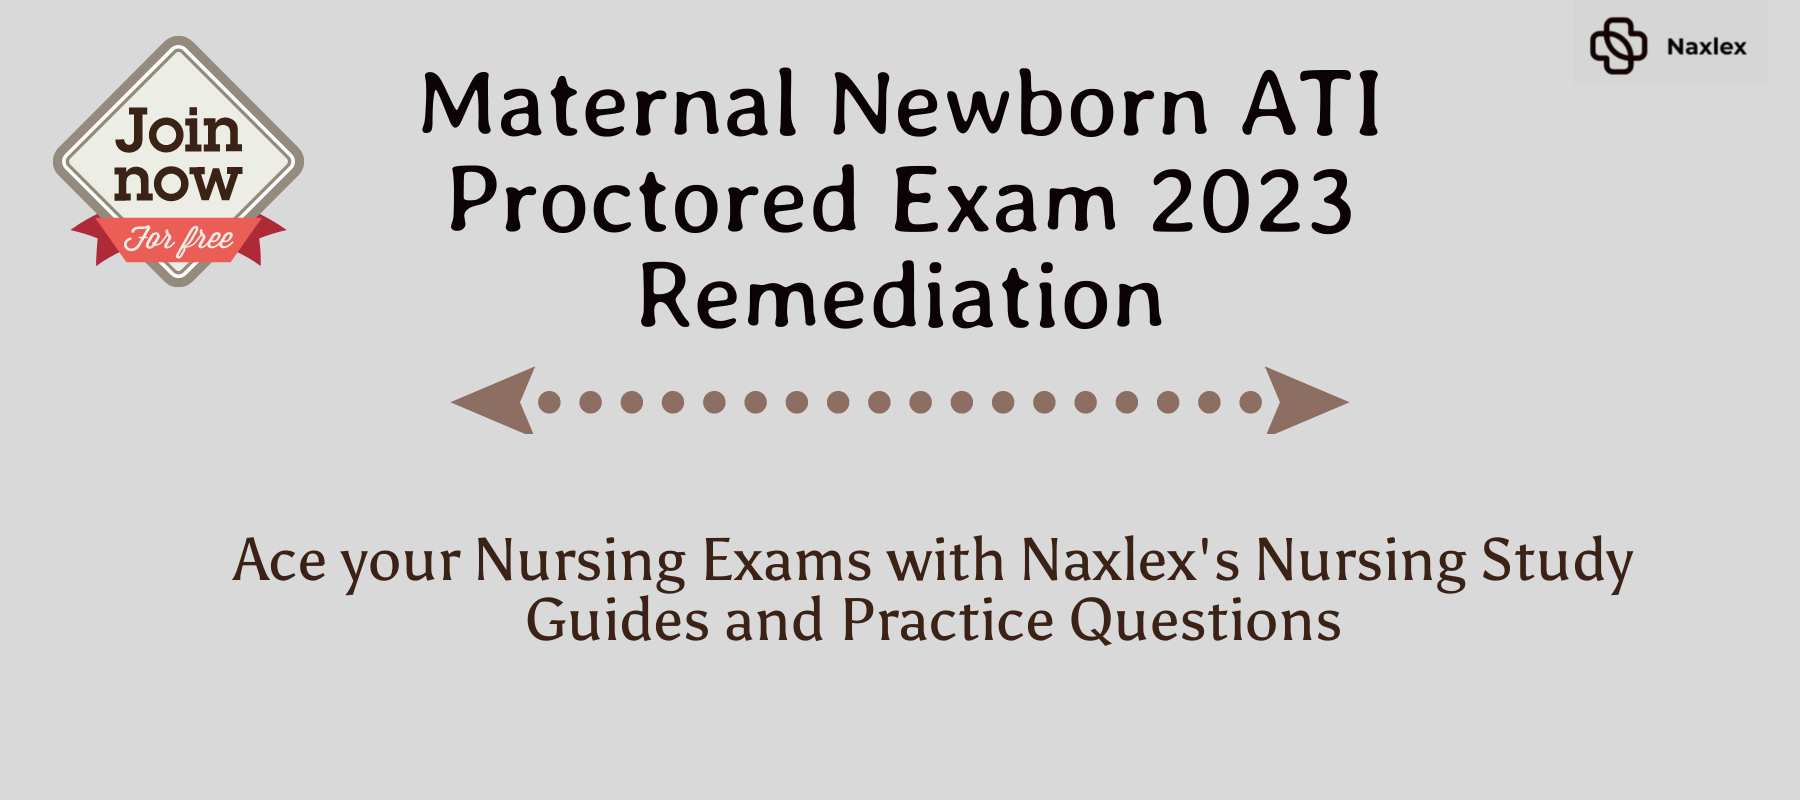 Maternal Newborn ATI Proctored Exam 2023 Remediation